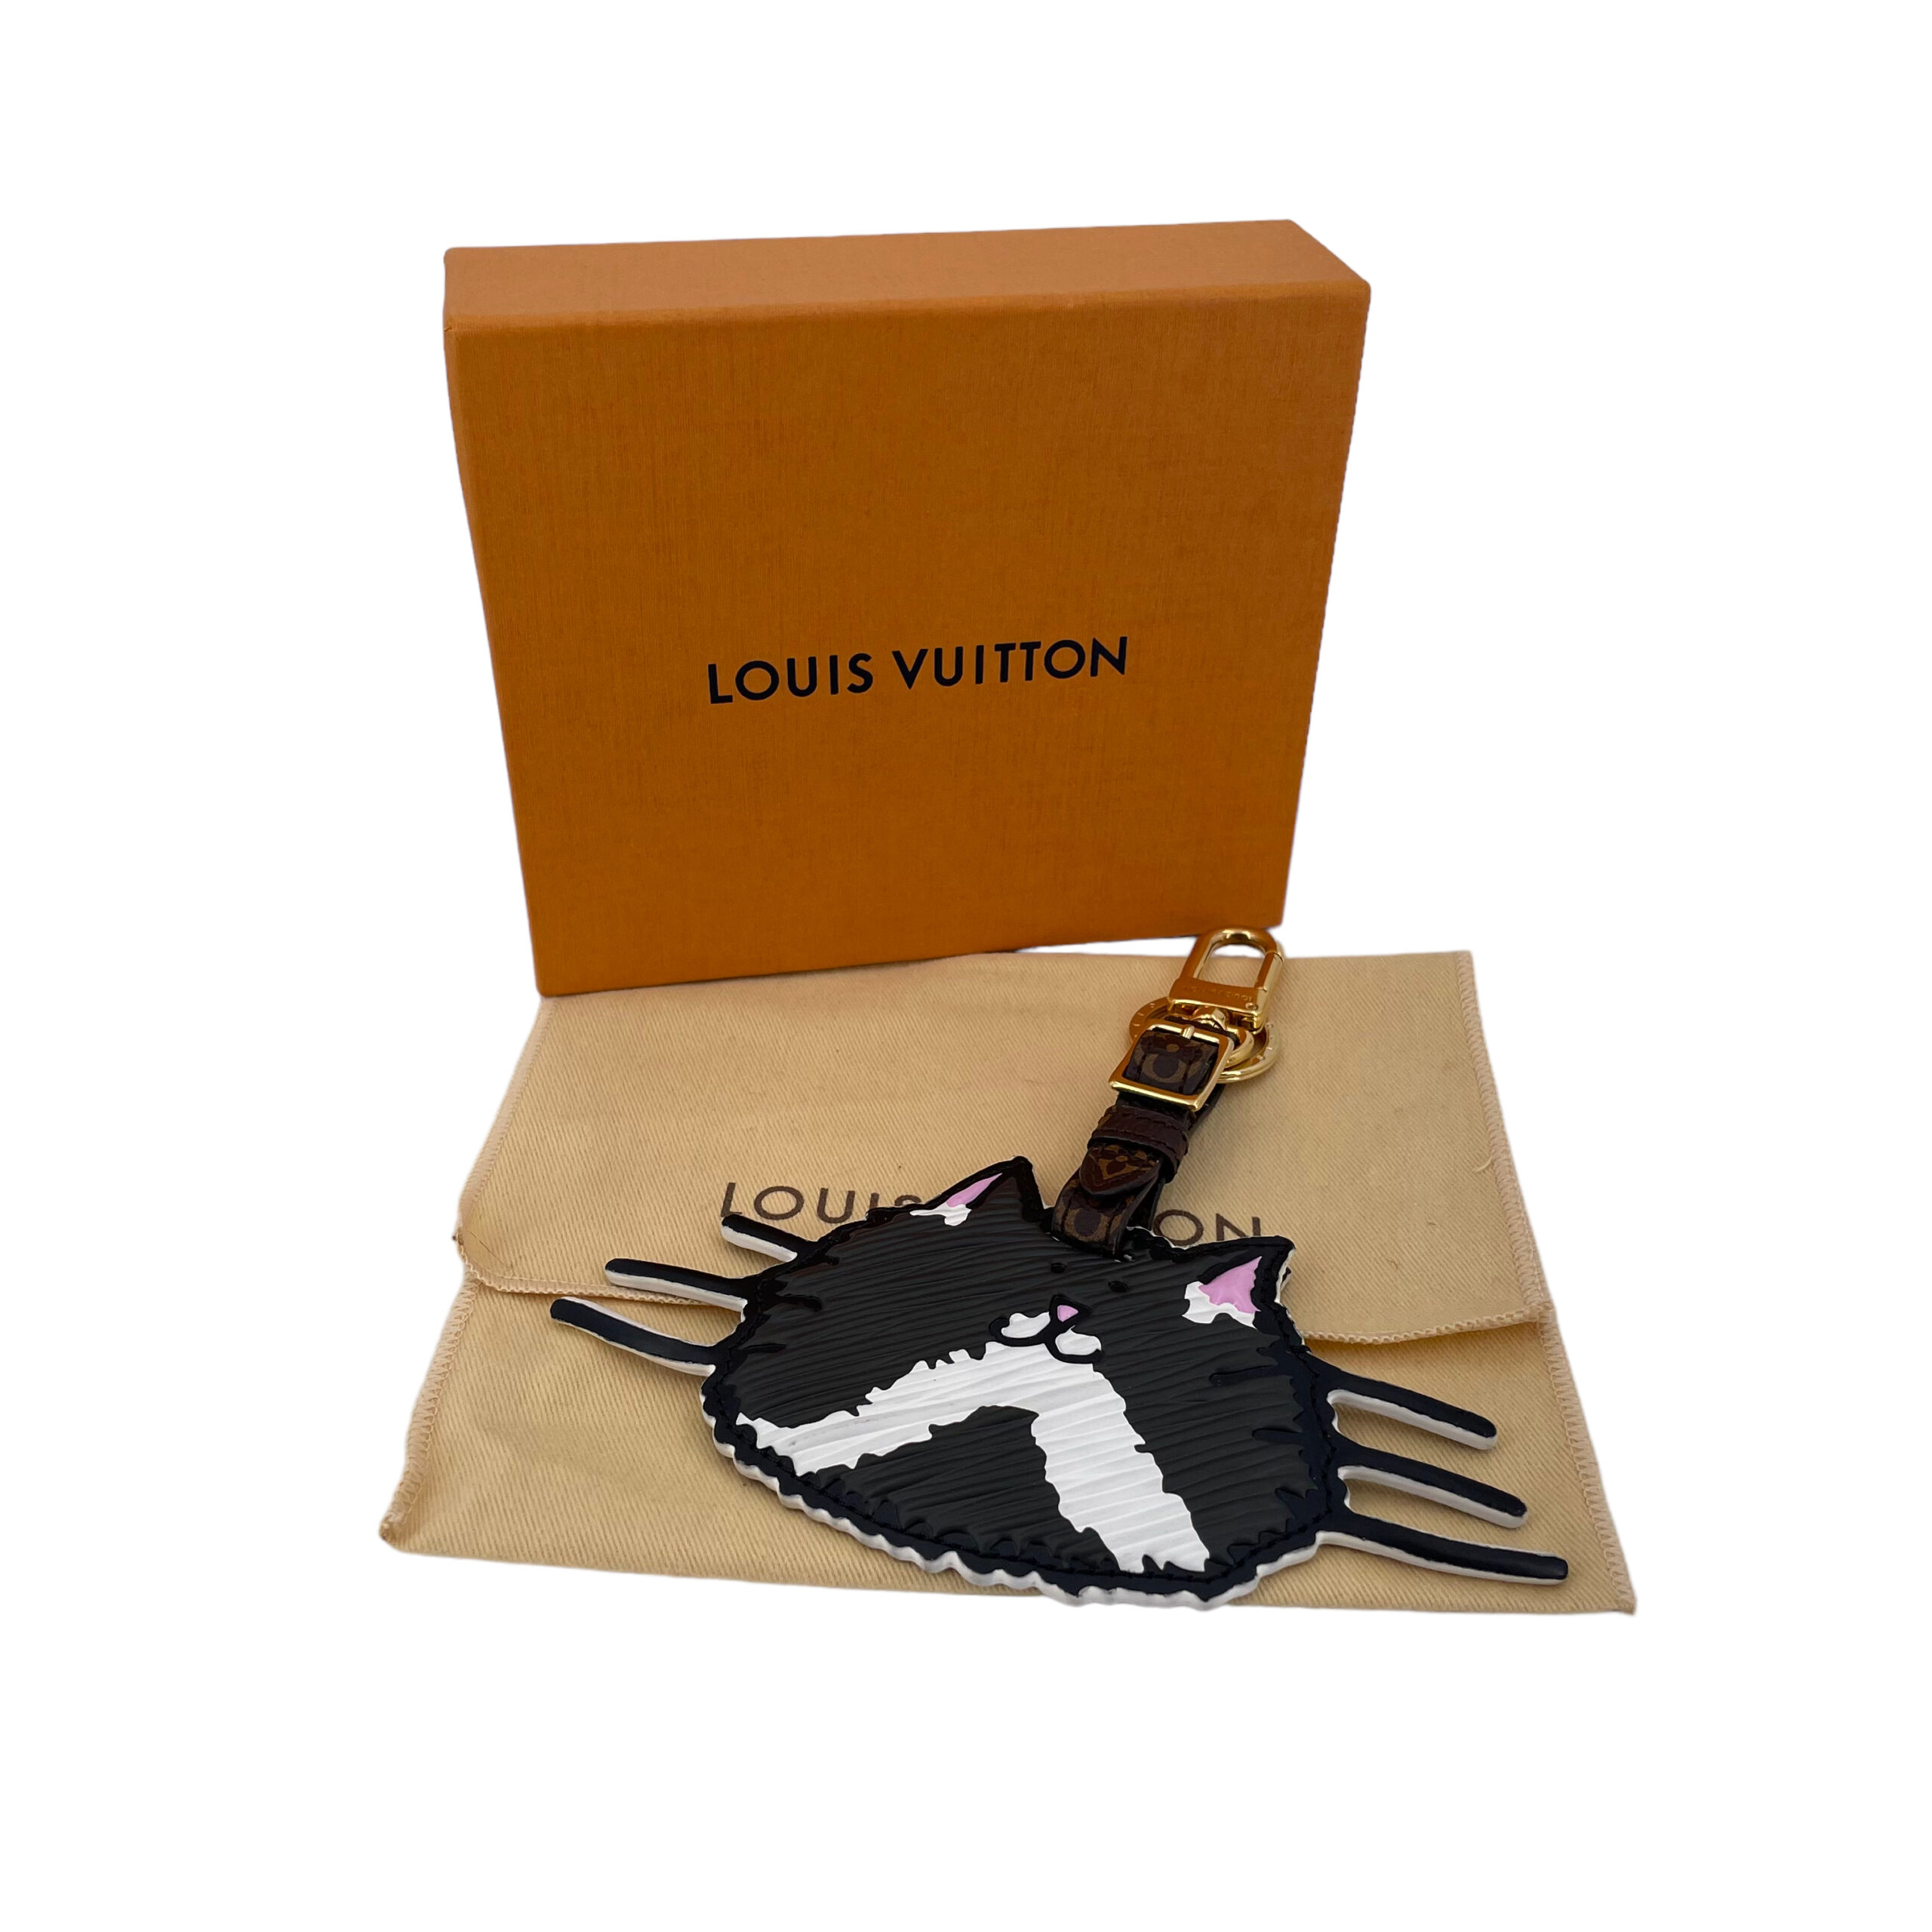 Whisker Fabulous - Absolutely Fabulous: The Louis Vuitton Catogram